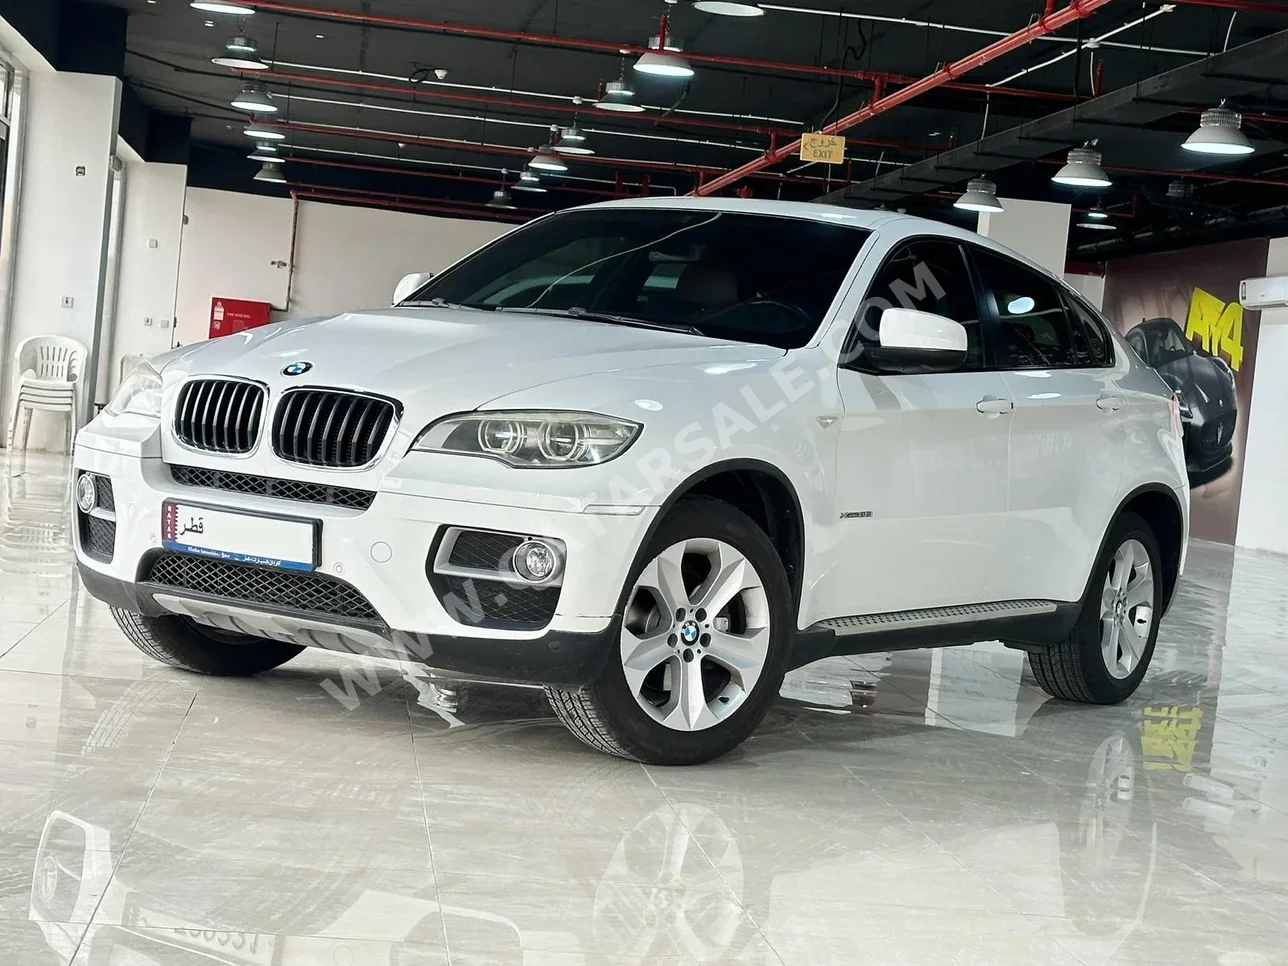 BMW  X-Series  X6  2013  Automatic  85,000 Km  6 Cylinder  Four Wheel Drive (4WD)  SUV  White